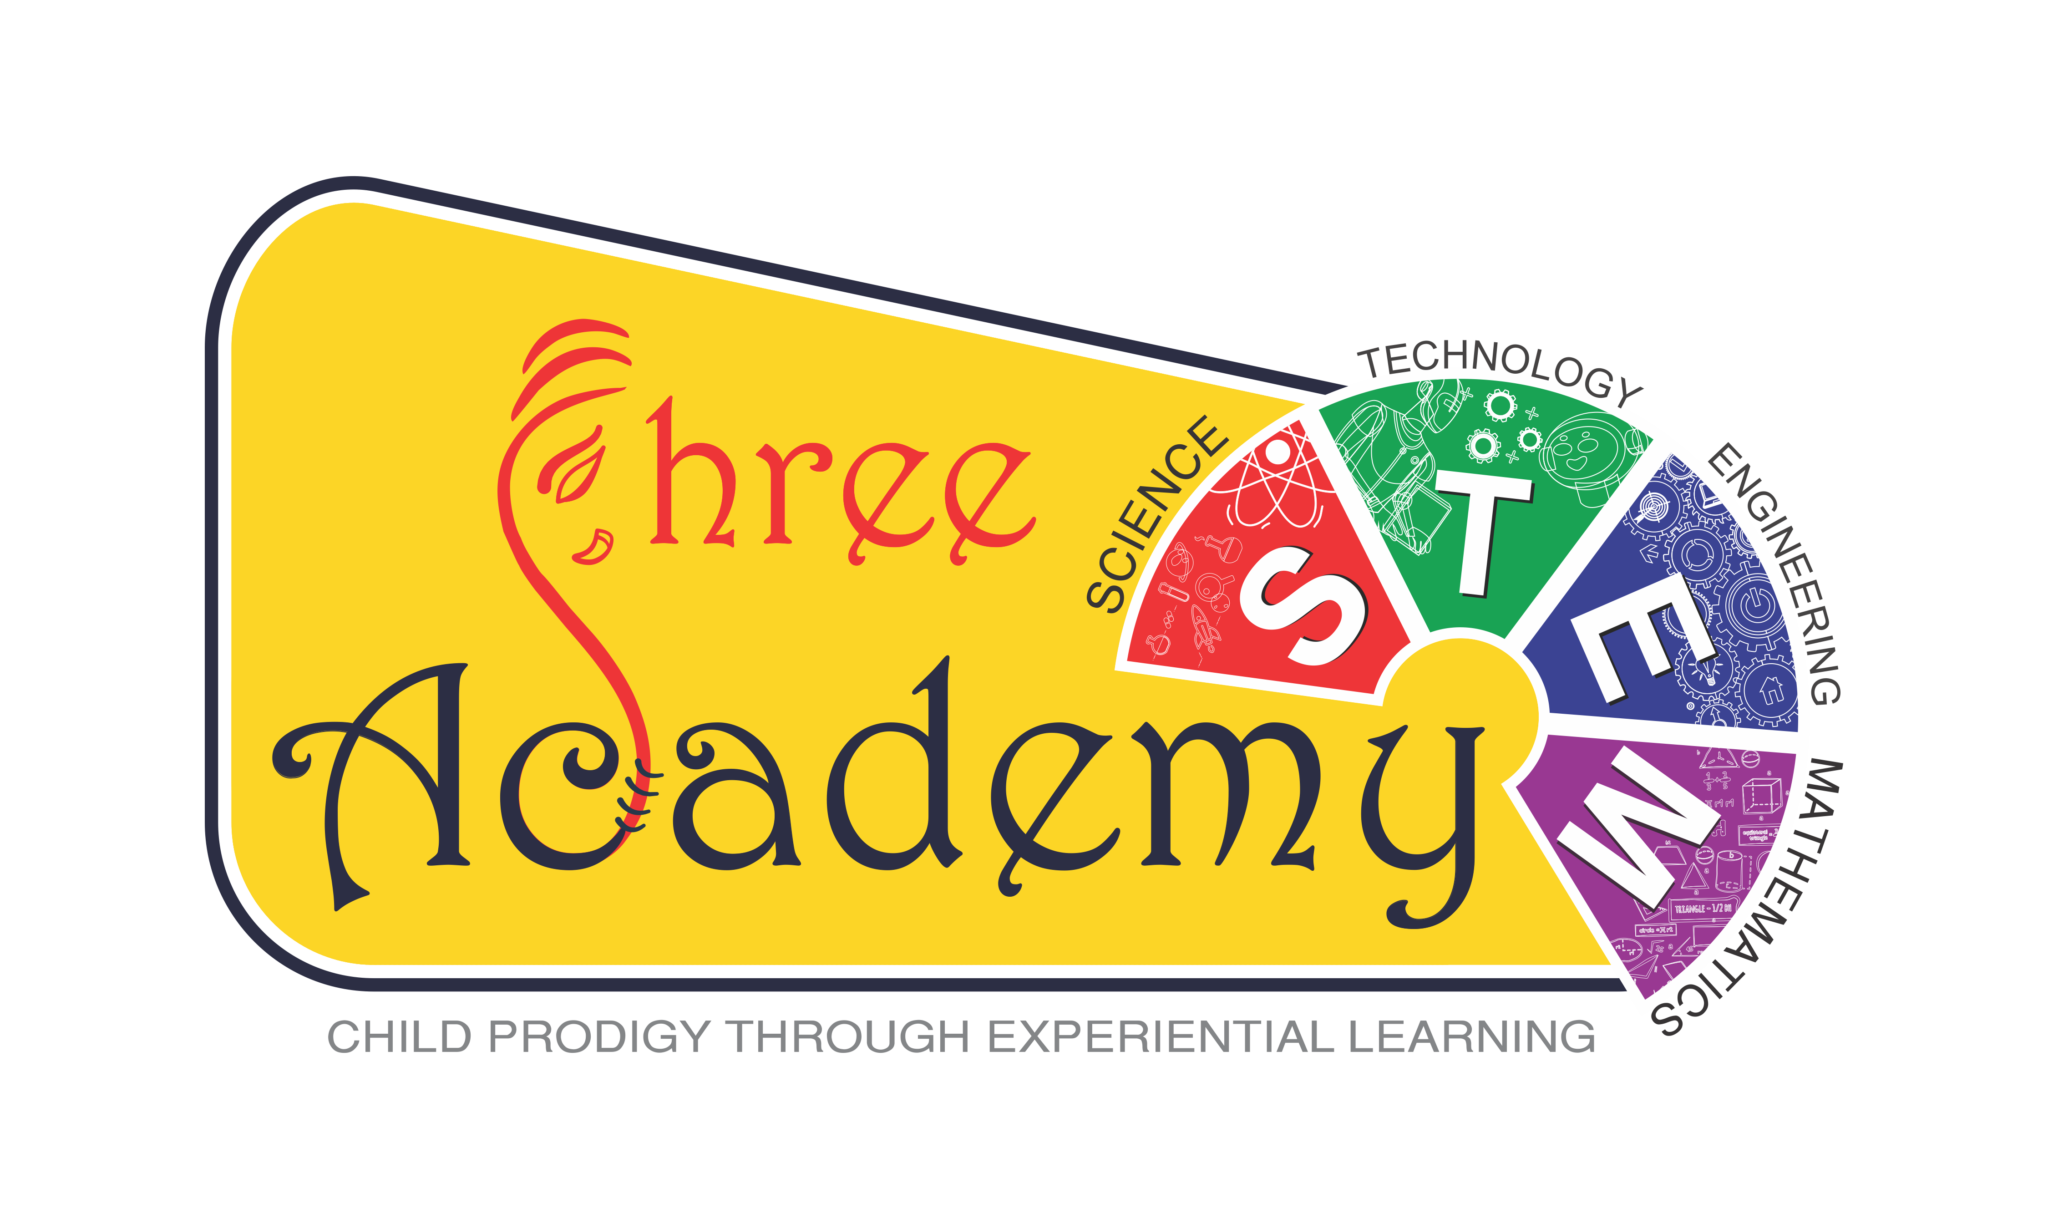 shree-academy-Logo-1-2048x1229